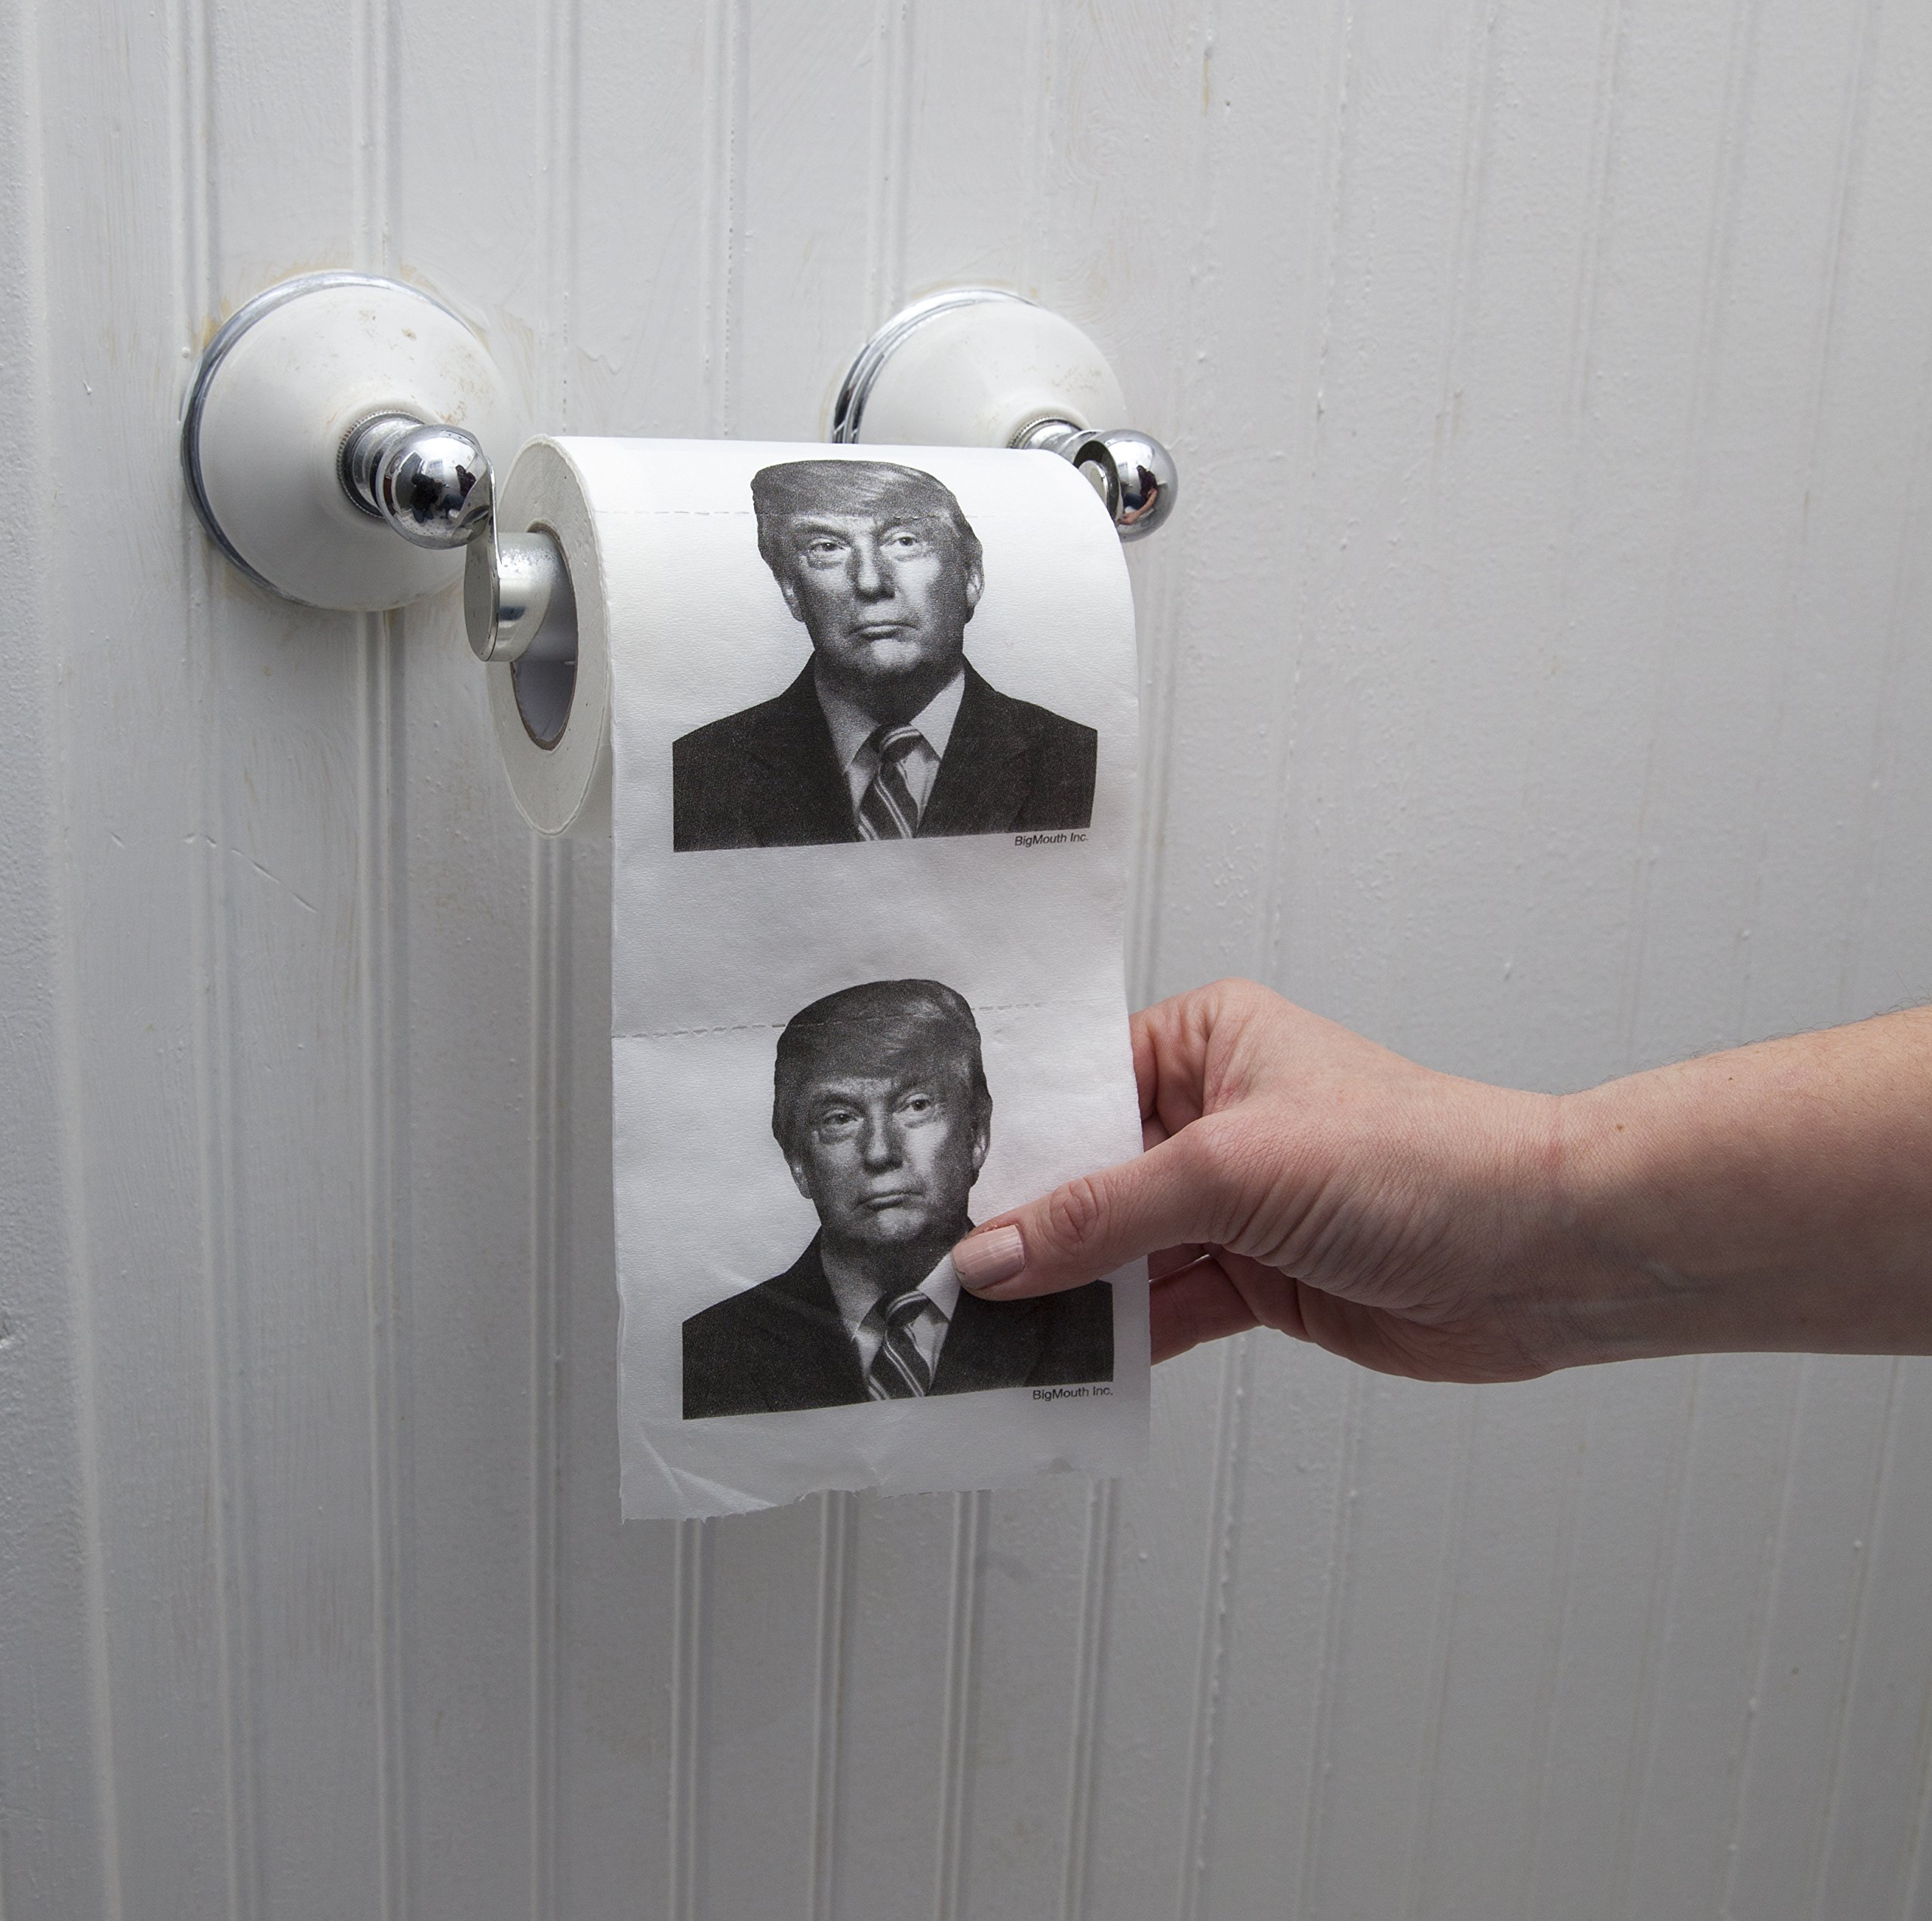 The Donald trump toilet paper is creepy